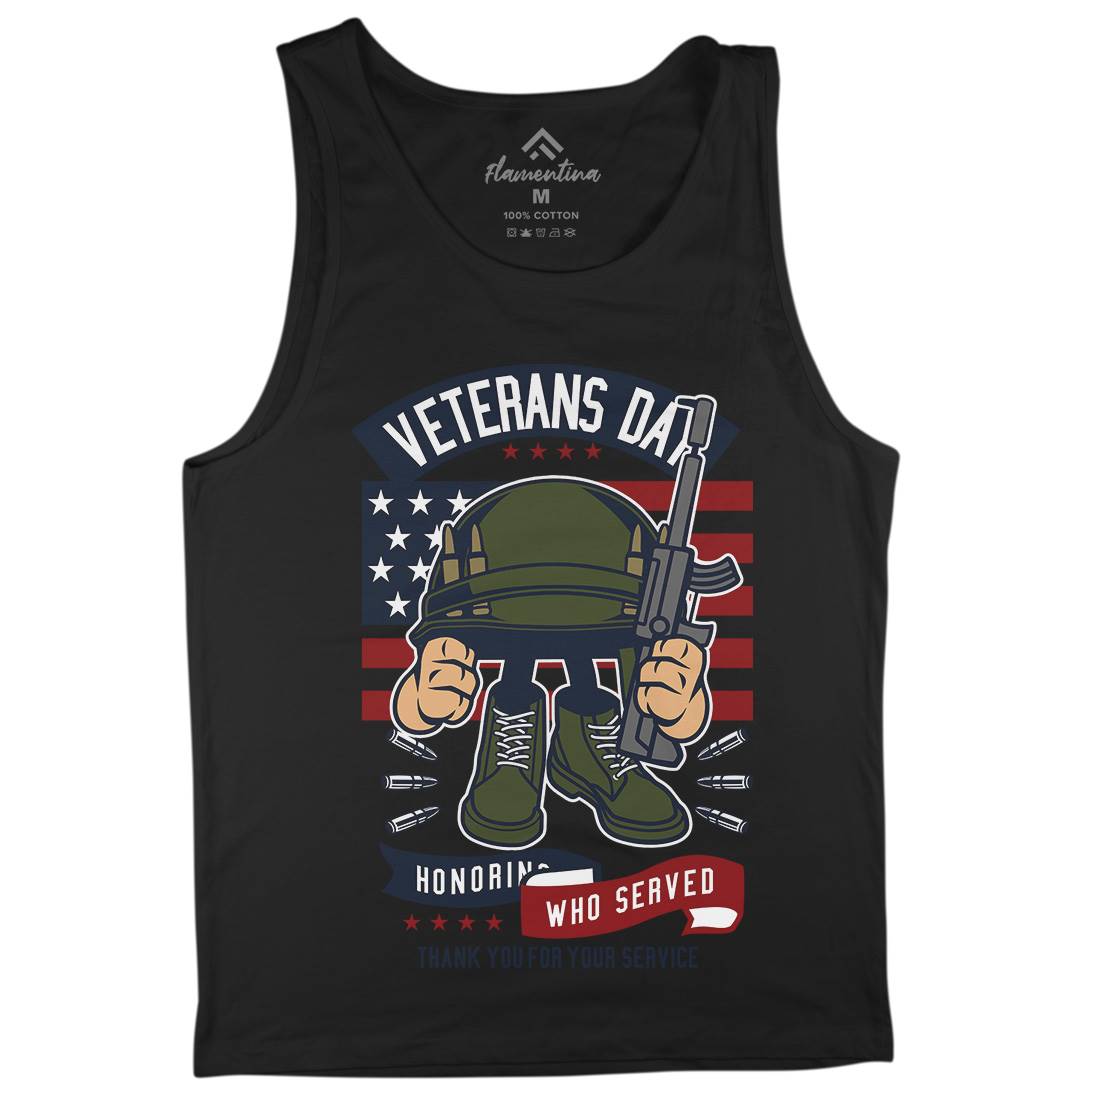 Veterans Day Mens Tank Top Vest Army C686